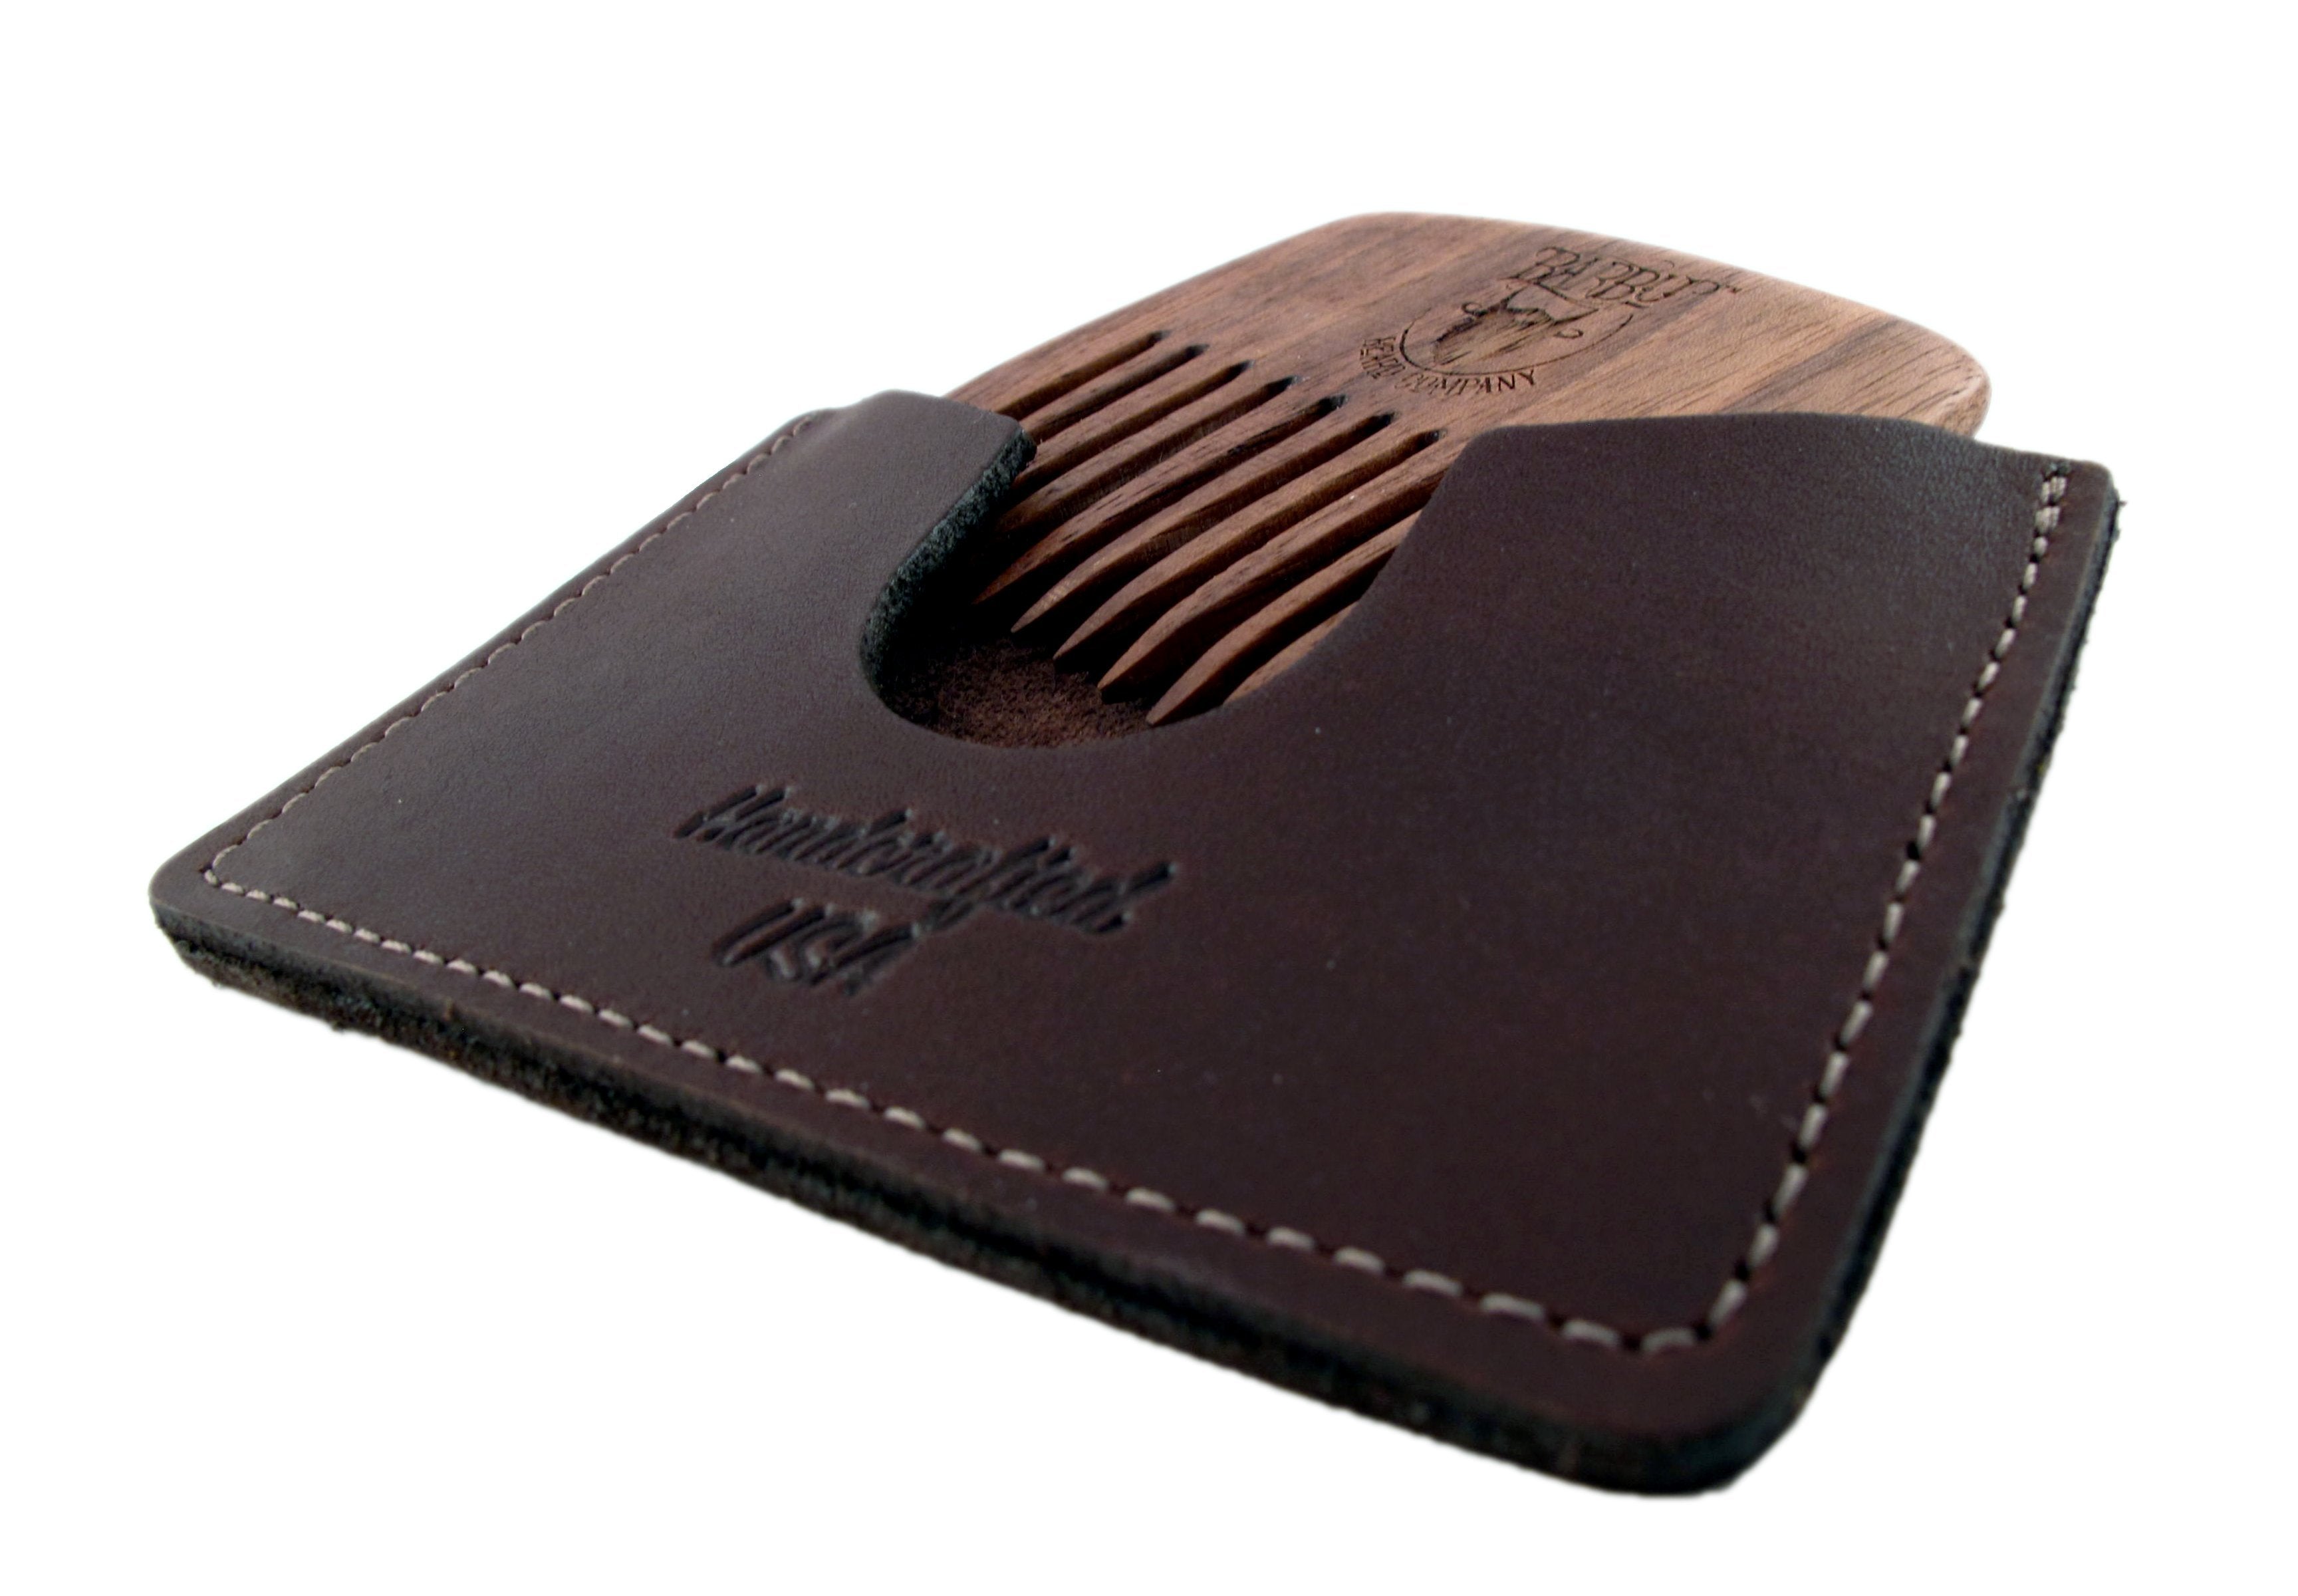 Barbu Beard Co. Walnut Comb with Genuine Leather Sleeve